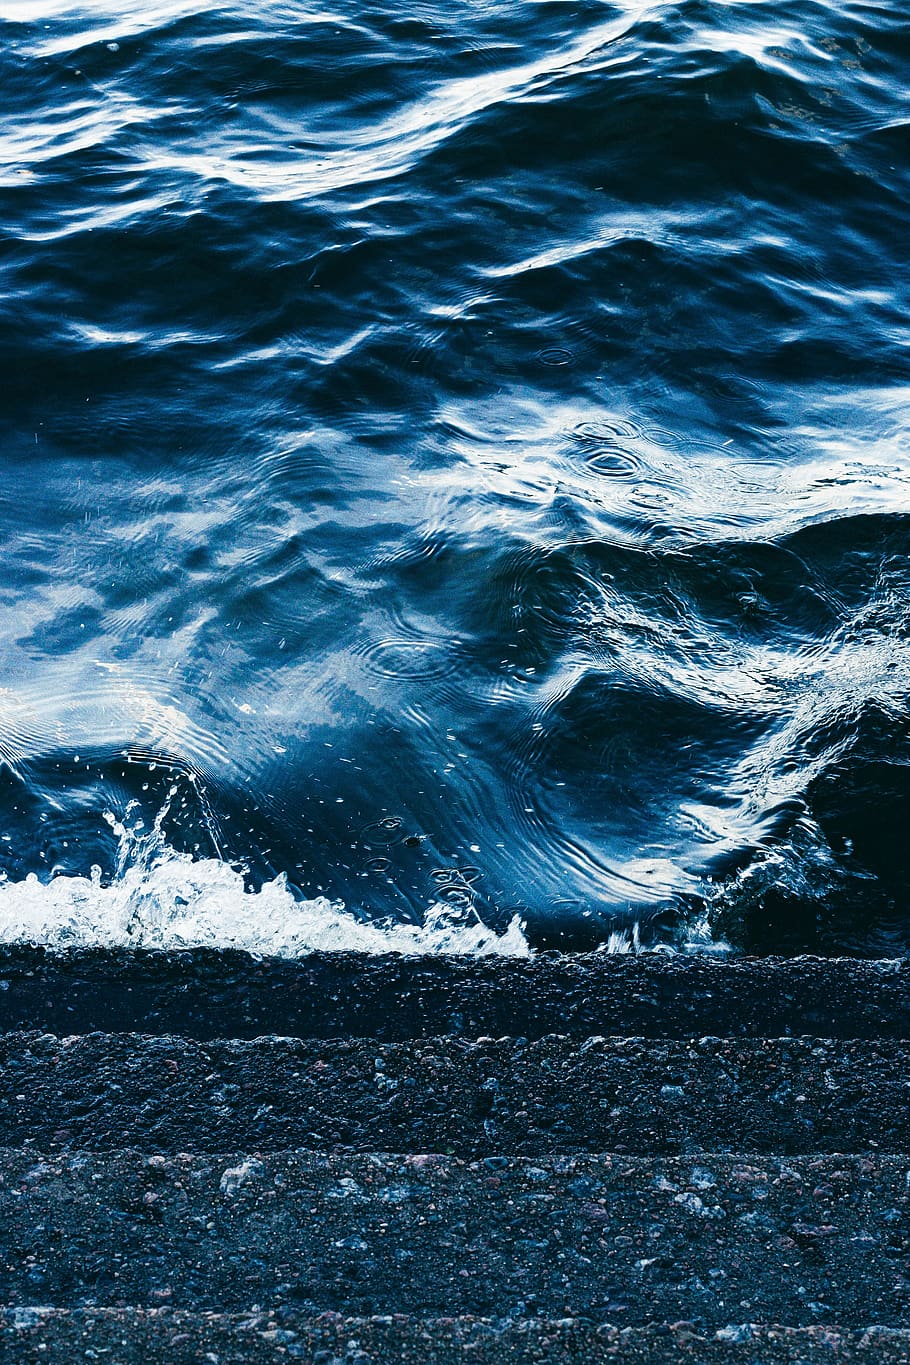 laut, semprot, biru, alam, lautan, gelombang, ikat kepala, busa, cair, gerakan